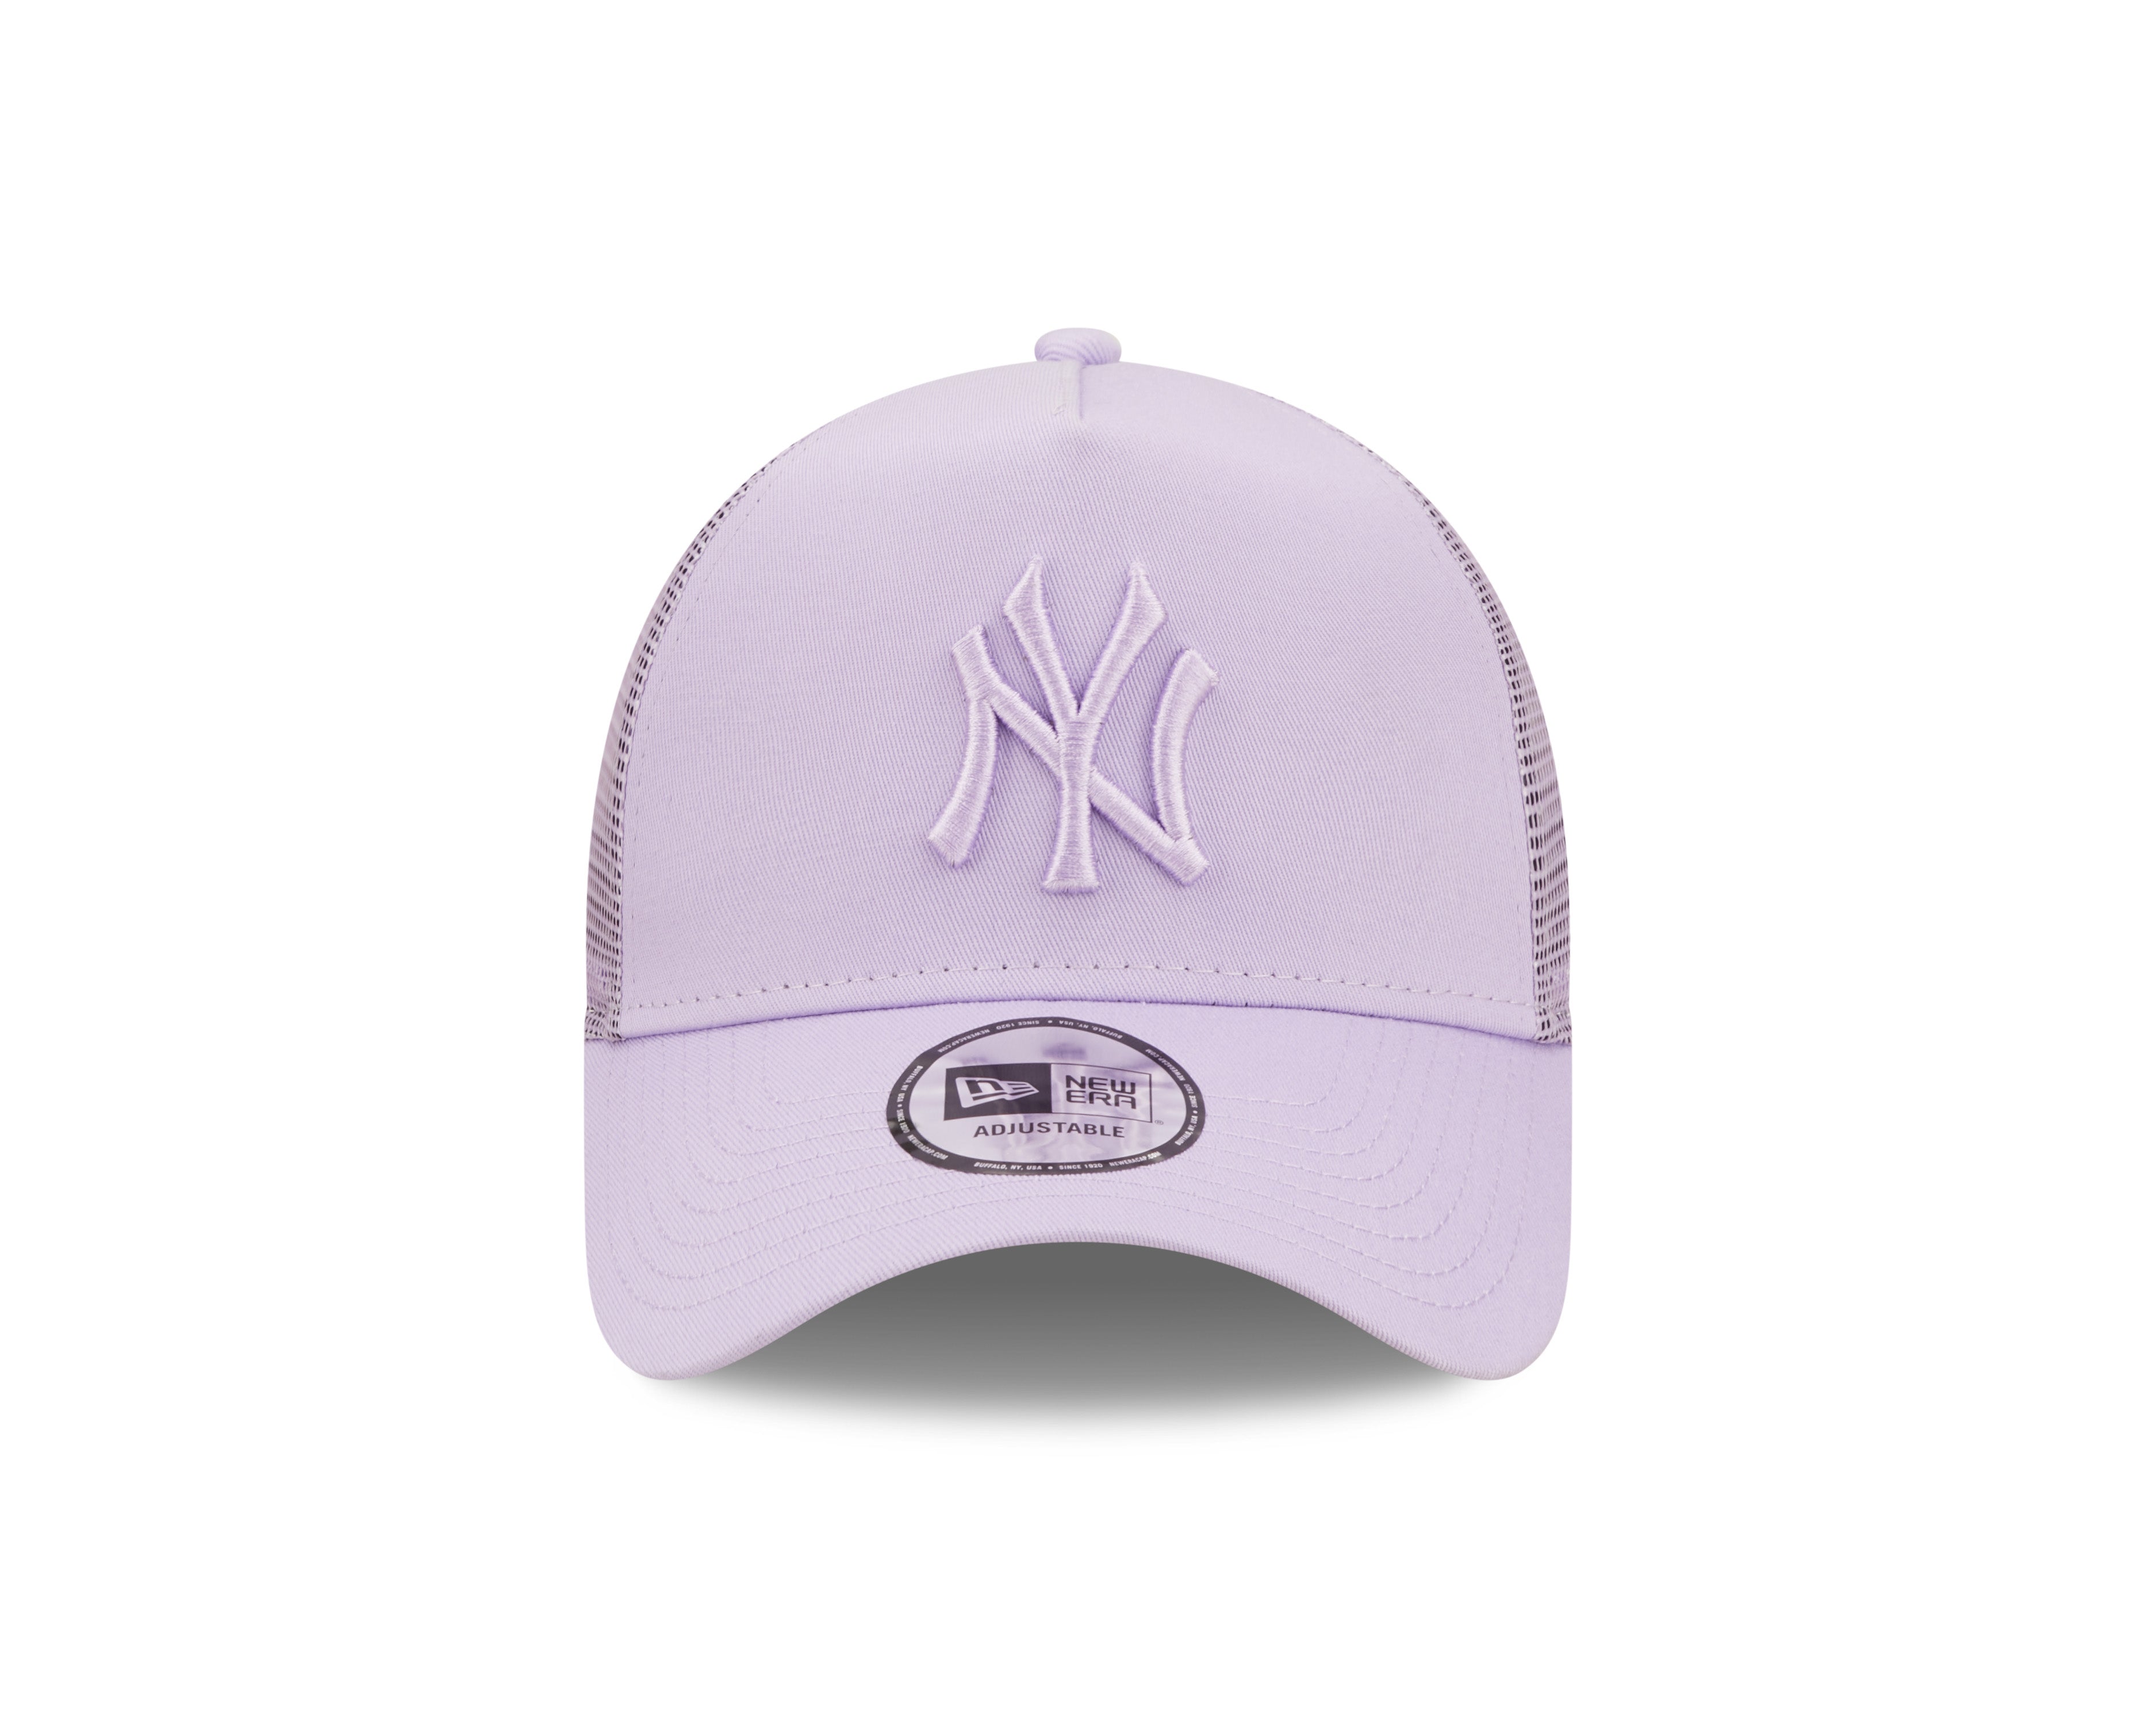 Tonal Mesh Trucker Cap New York Yankees - Lavendel/Lavendel - Headz Up 